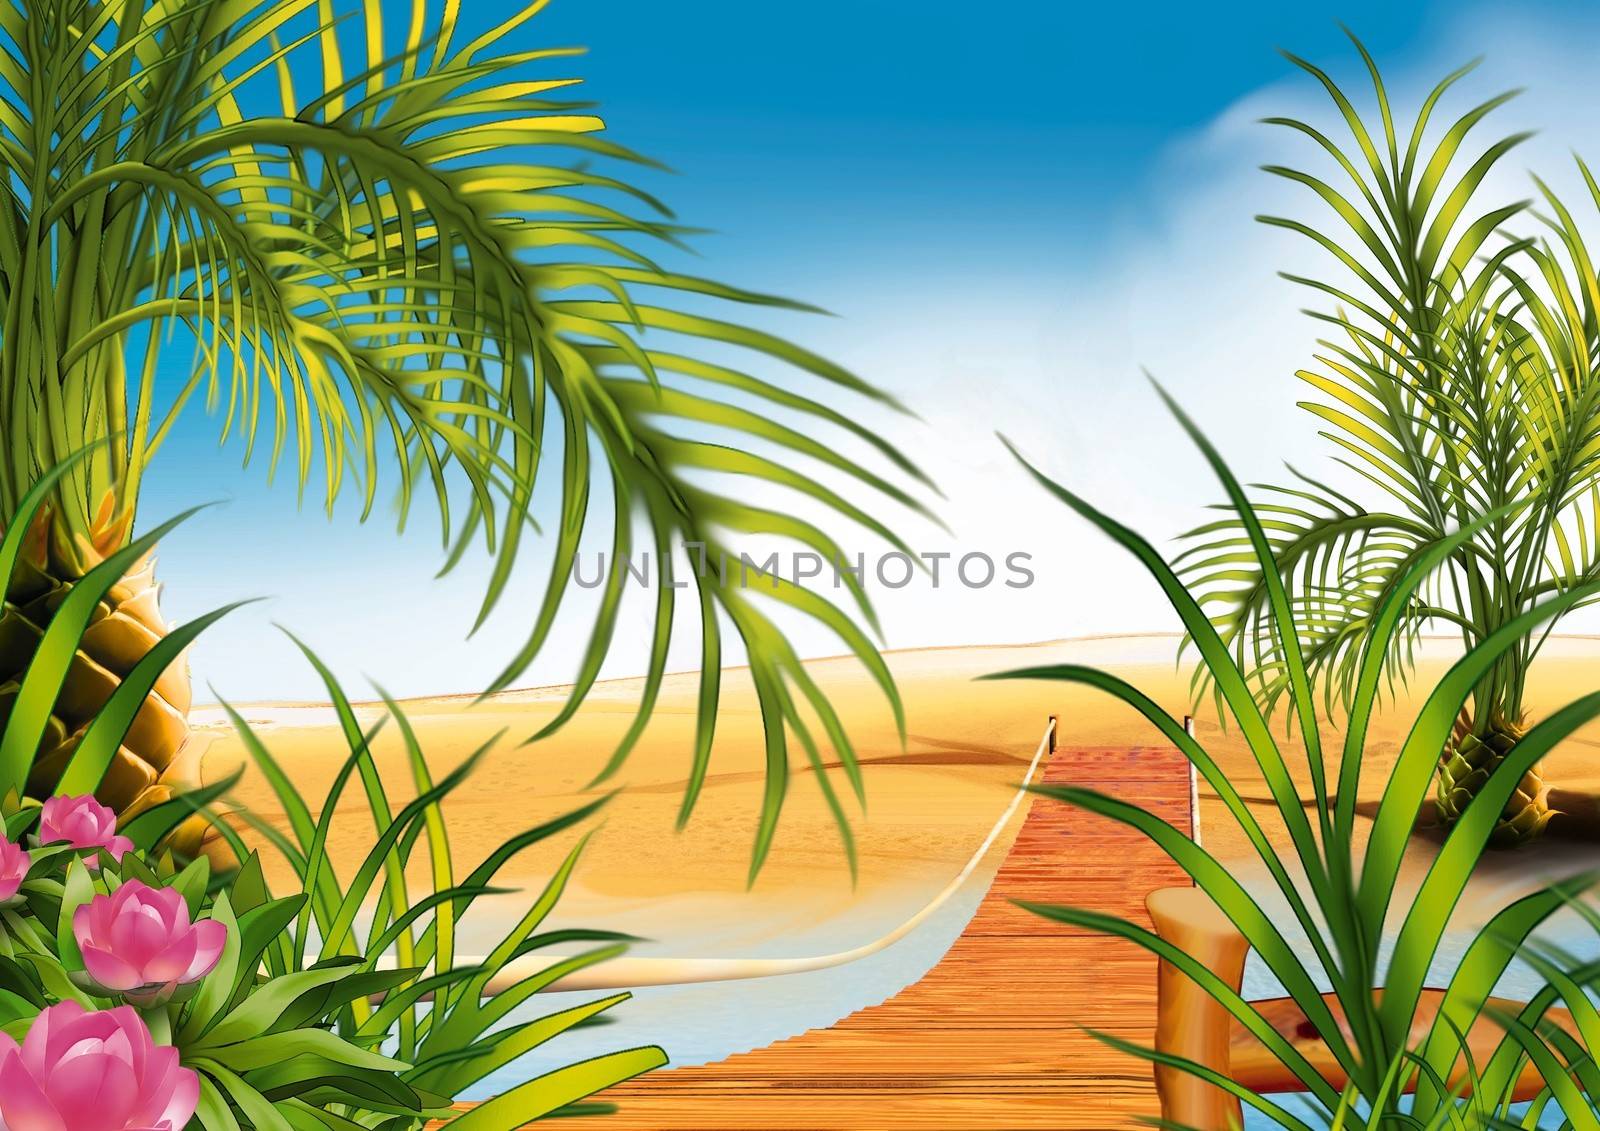 Footbridge On The Beach - Background Illustration